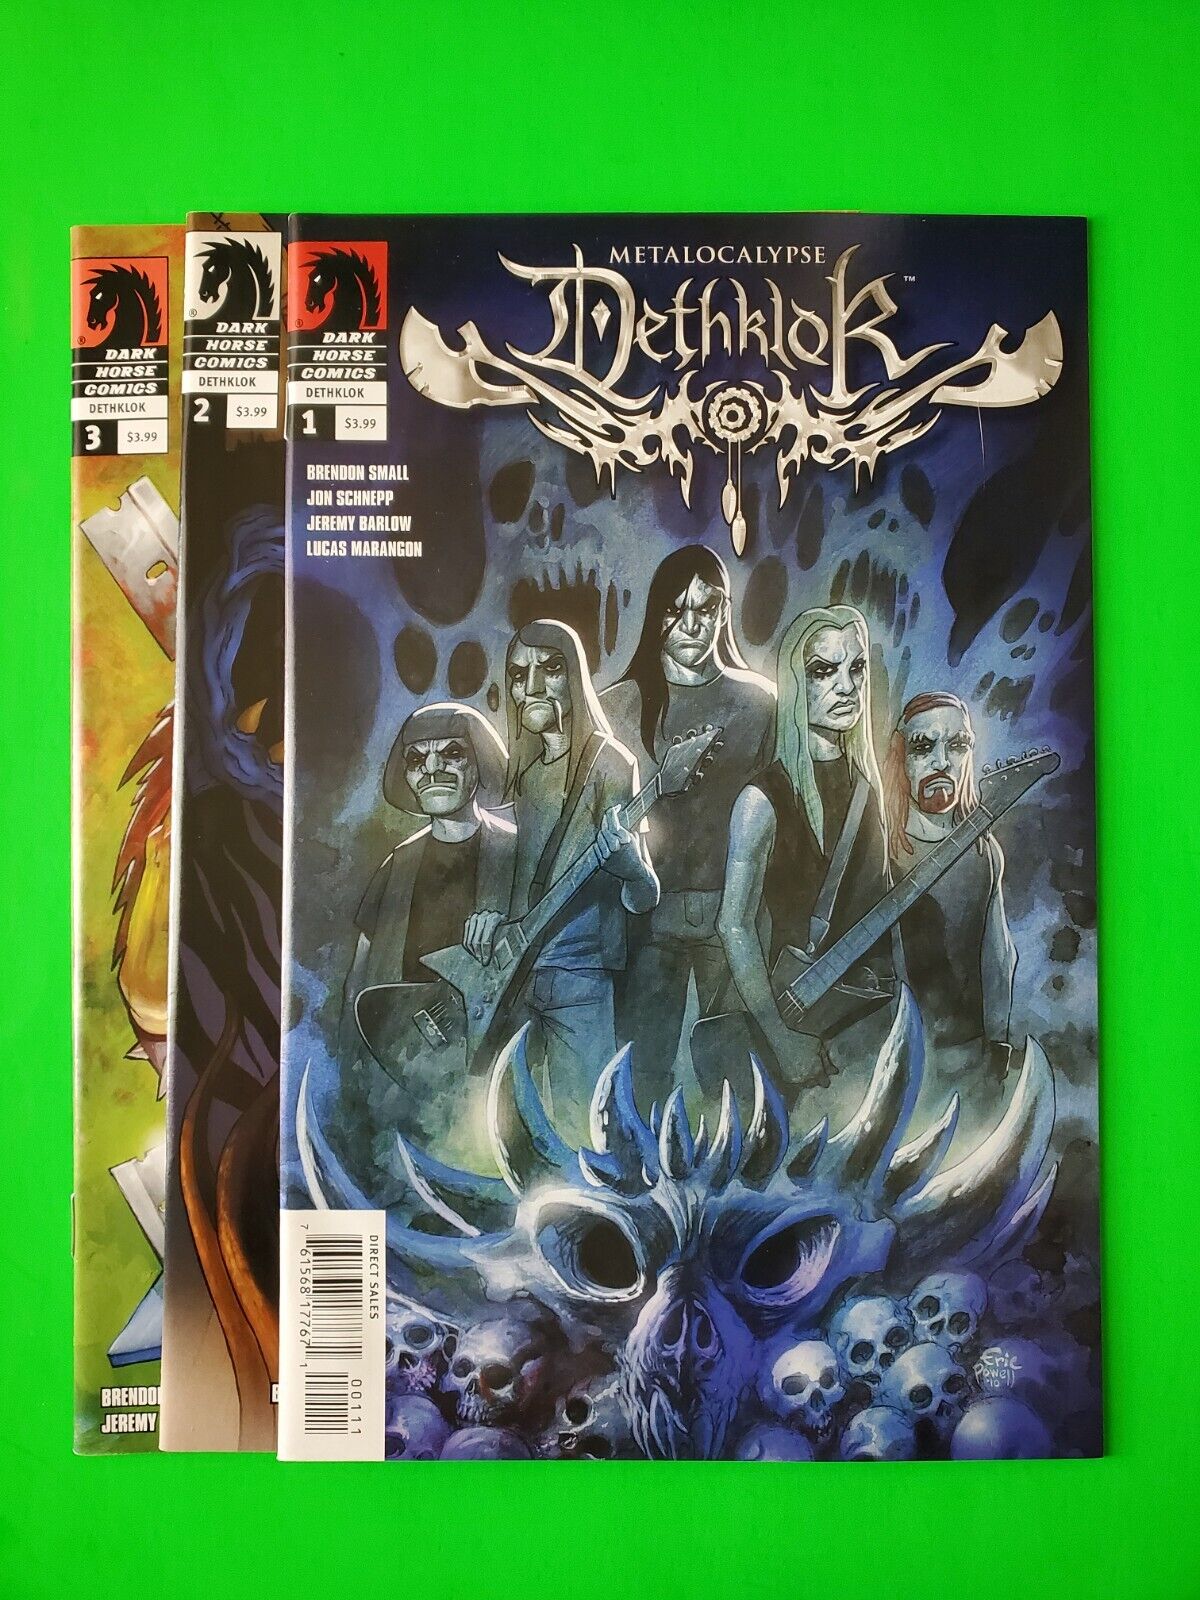 Metalocalypse: Dethklok #1 #2 #3 - Complete Brendon Small Dark Horse Series 2010